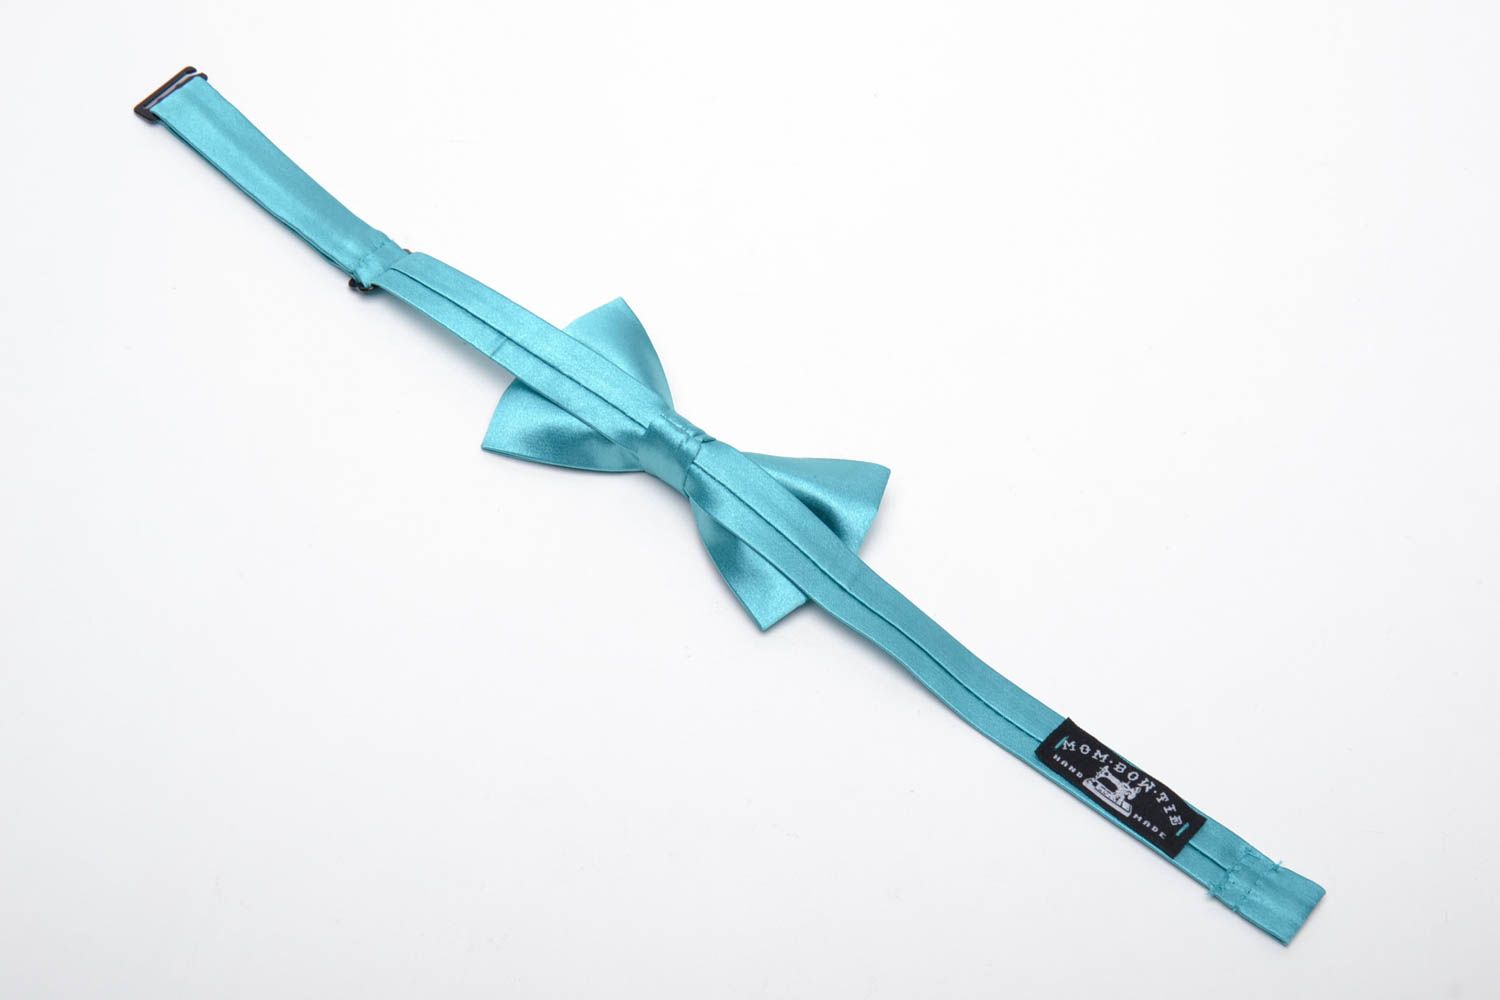 Turquoise fabric bow tie photo 4